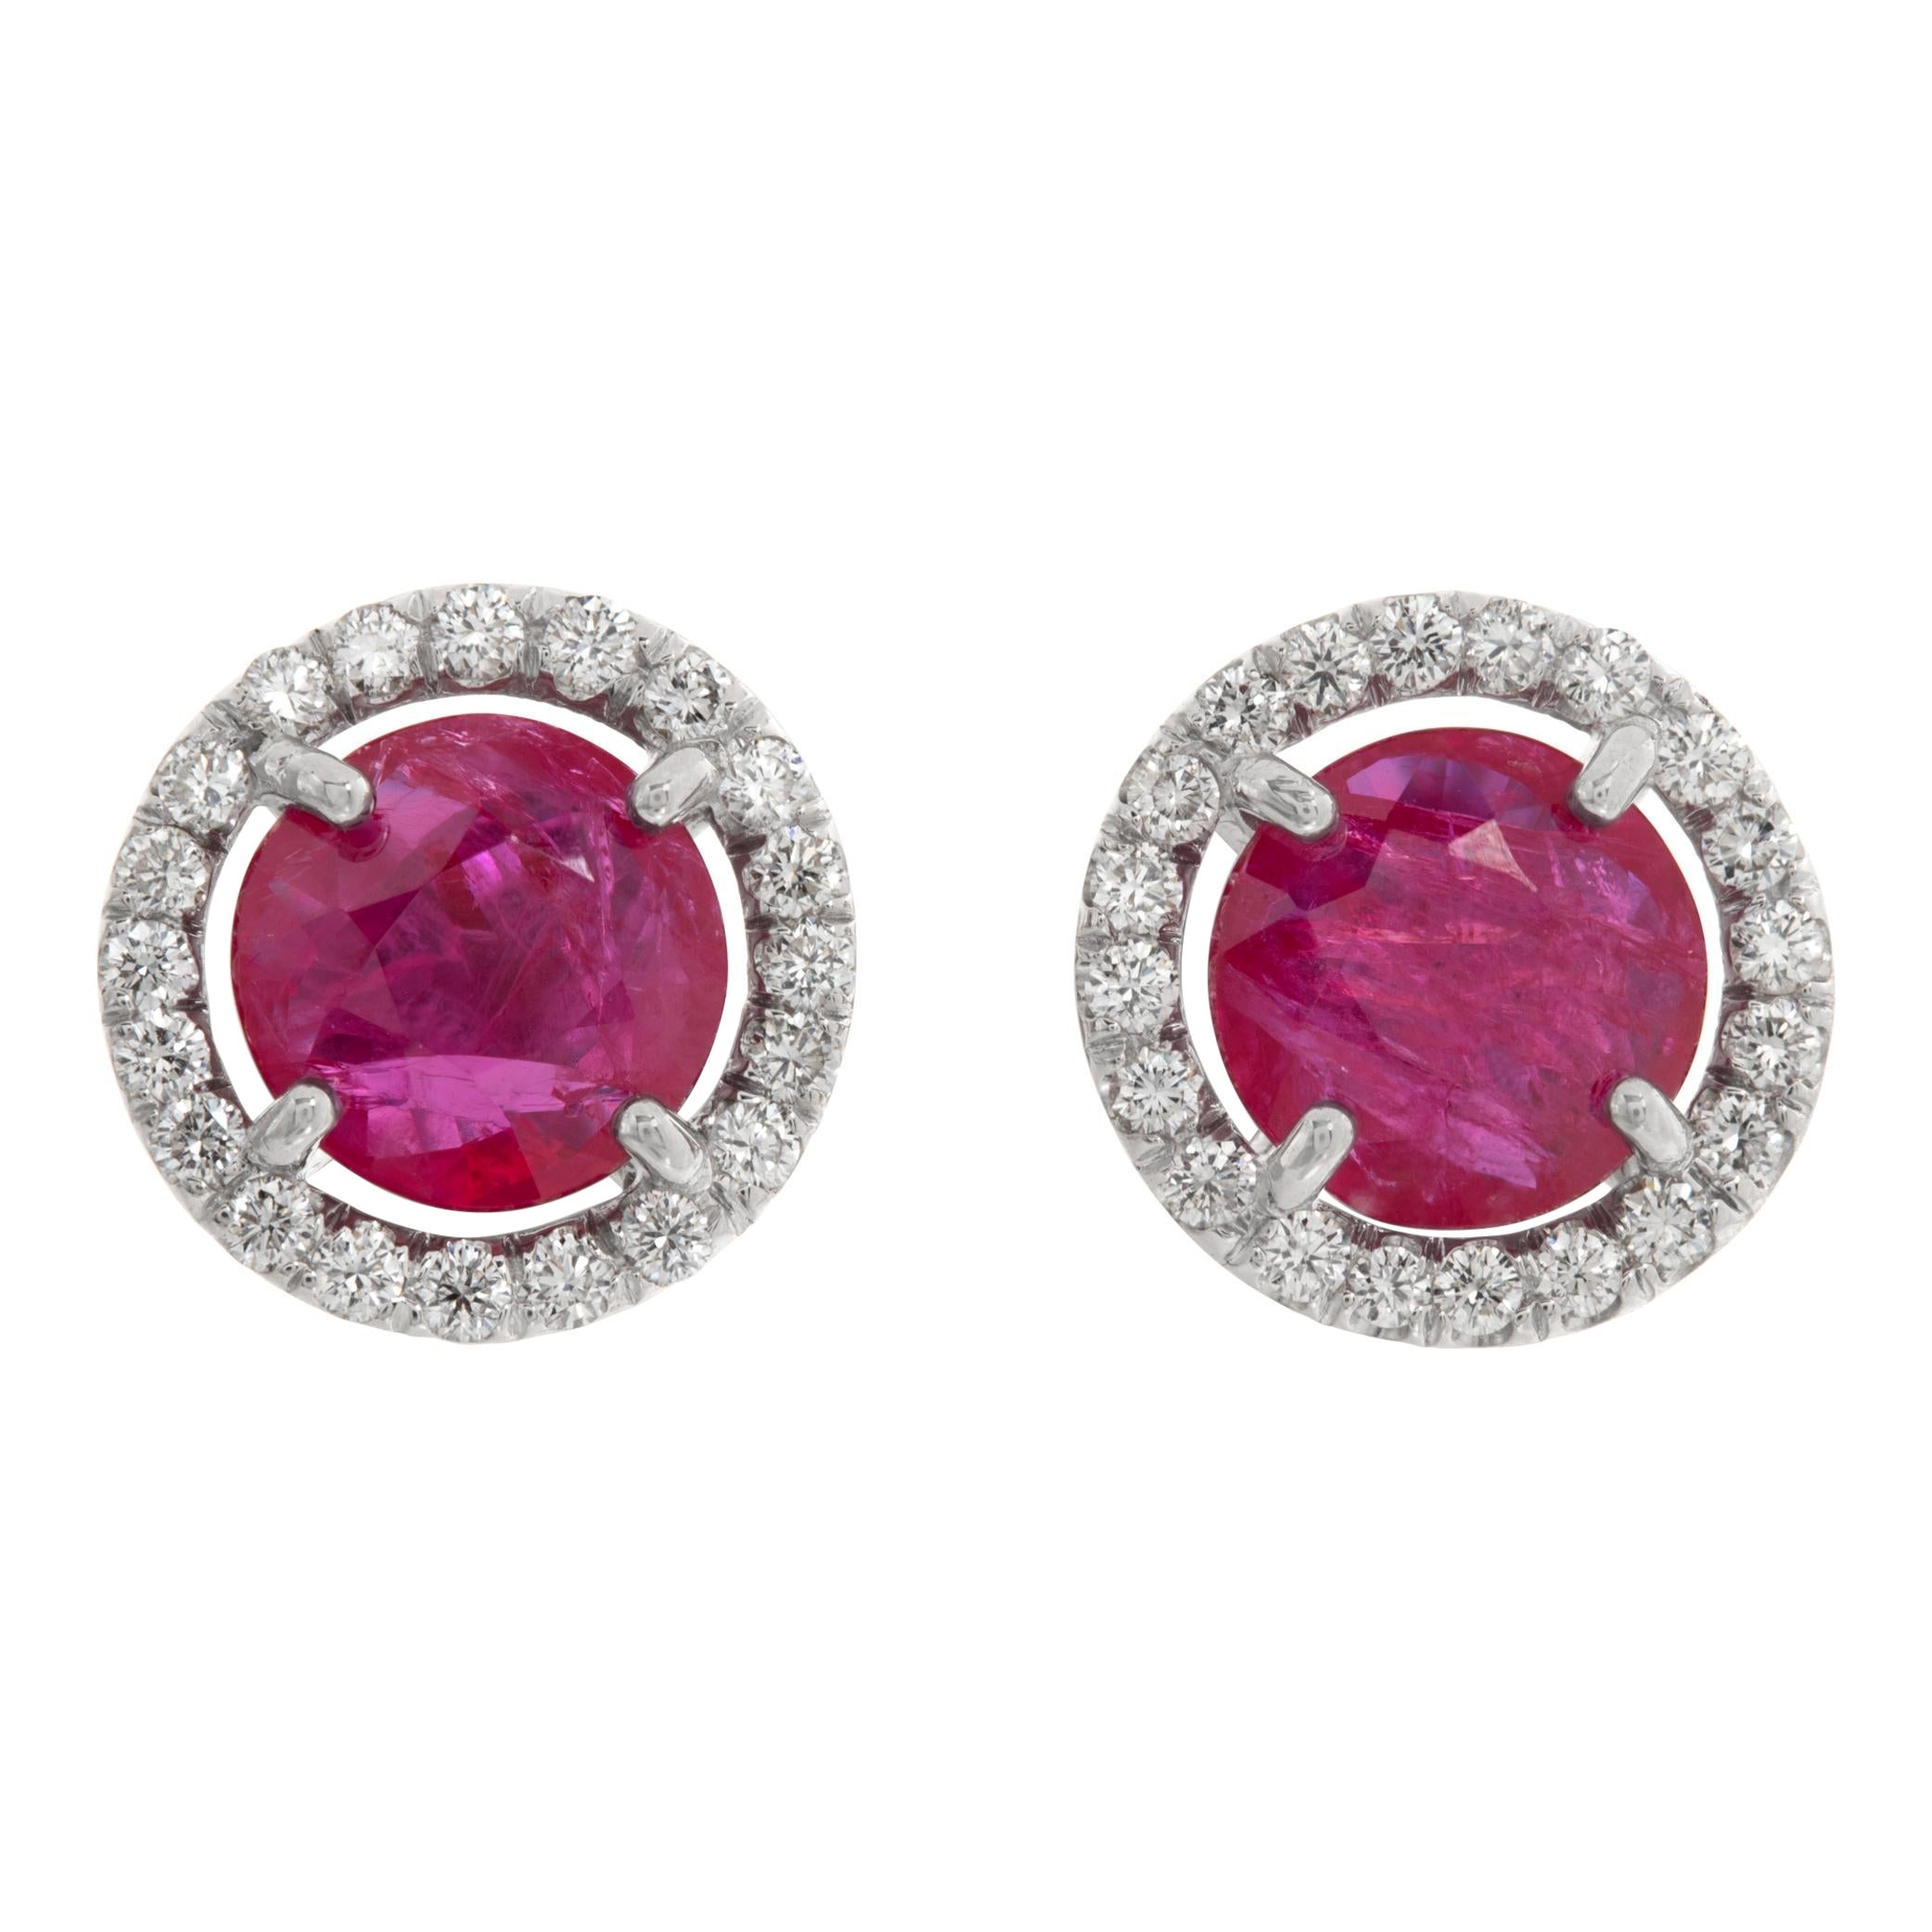 Rubies & diamonds 18K white gold stud earring For Sale